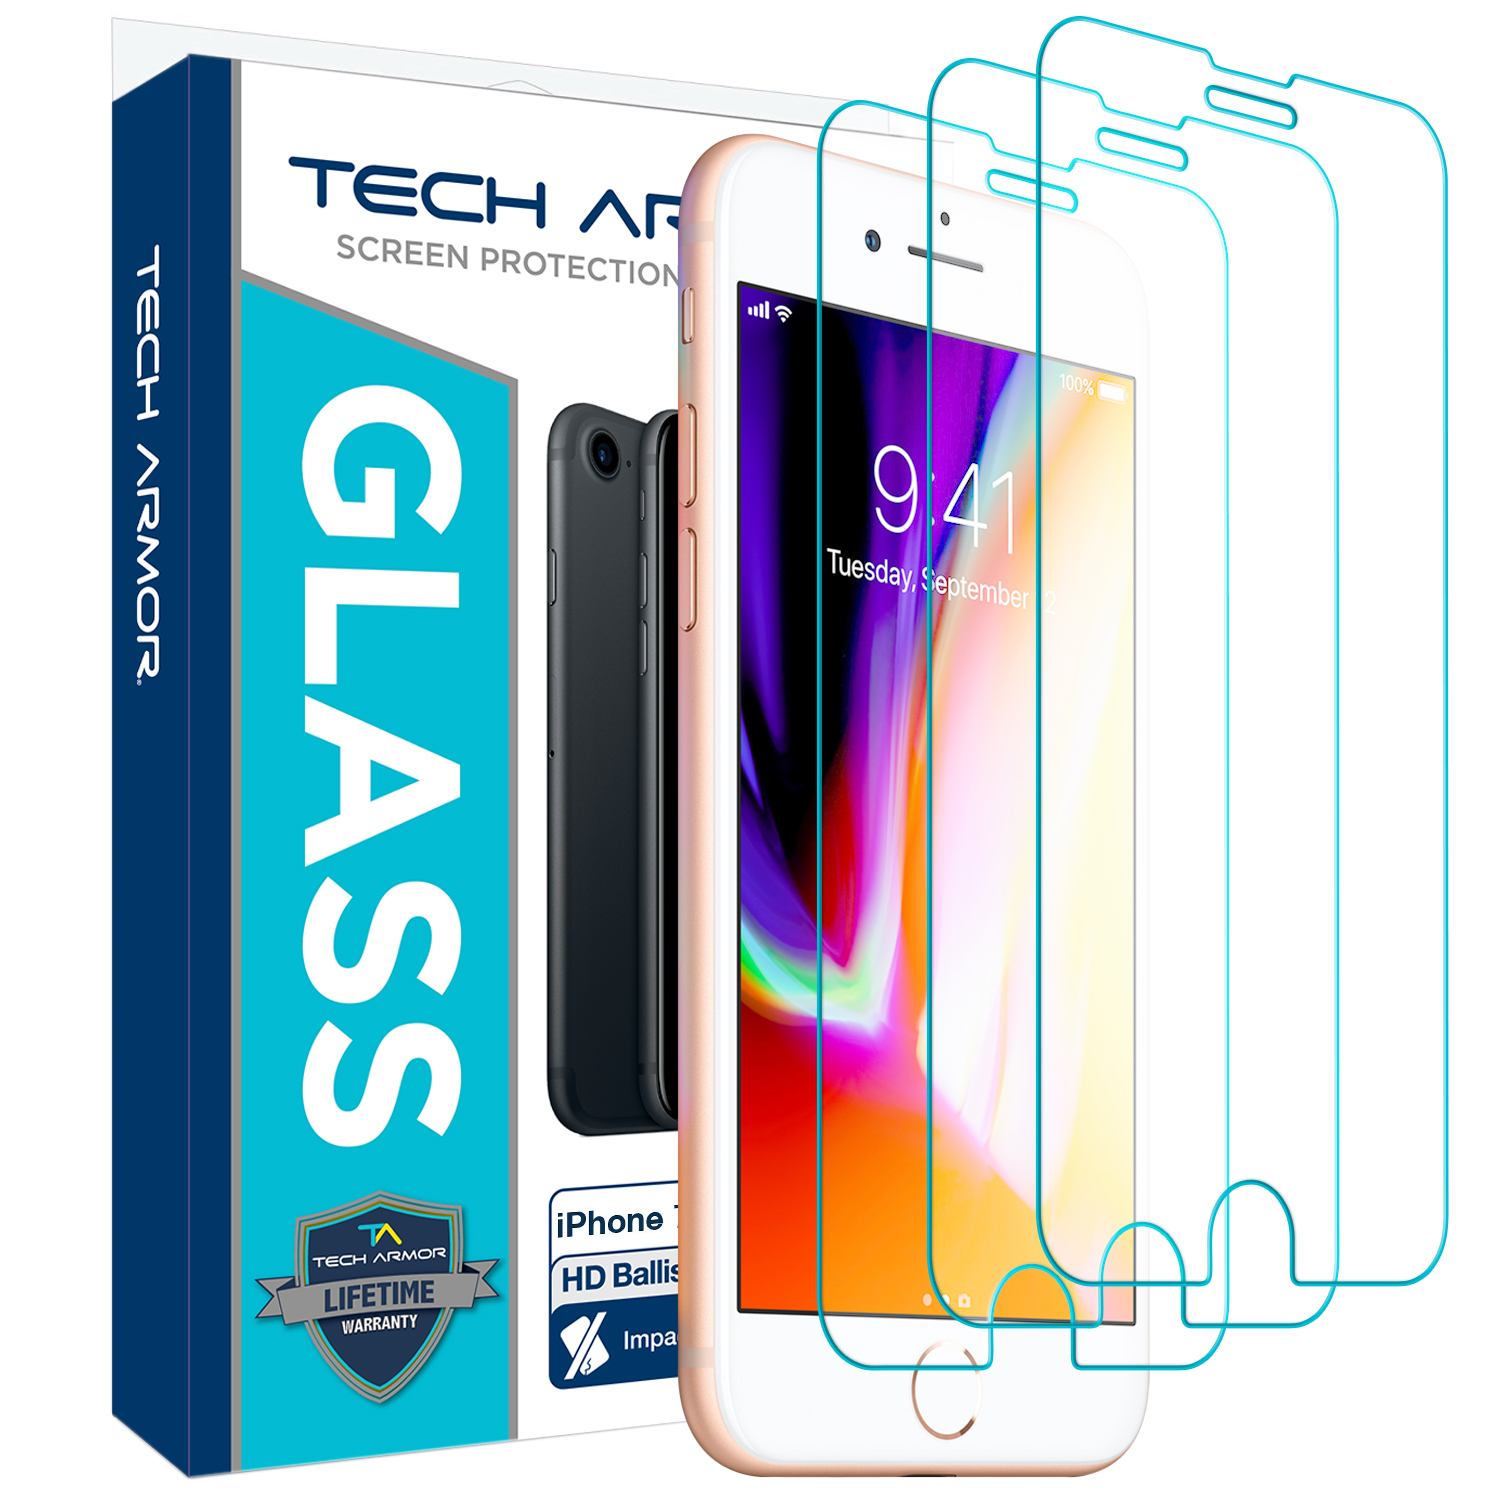 verwennen bestellen Republikeinse partij Tech Armor Ballistic Glass Screen Protector Designed for Apple iPhone 6 Plus,  6s Plus, iPhone 7